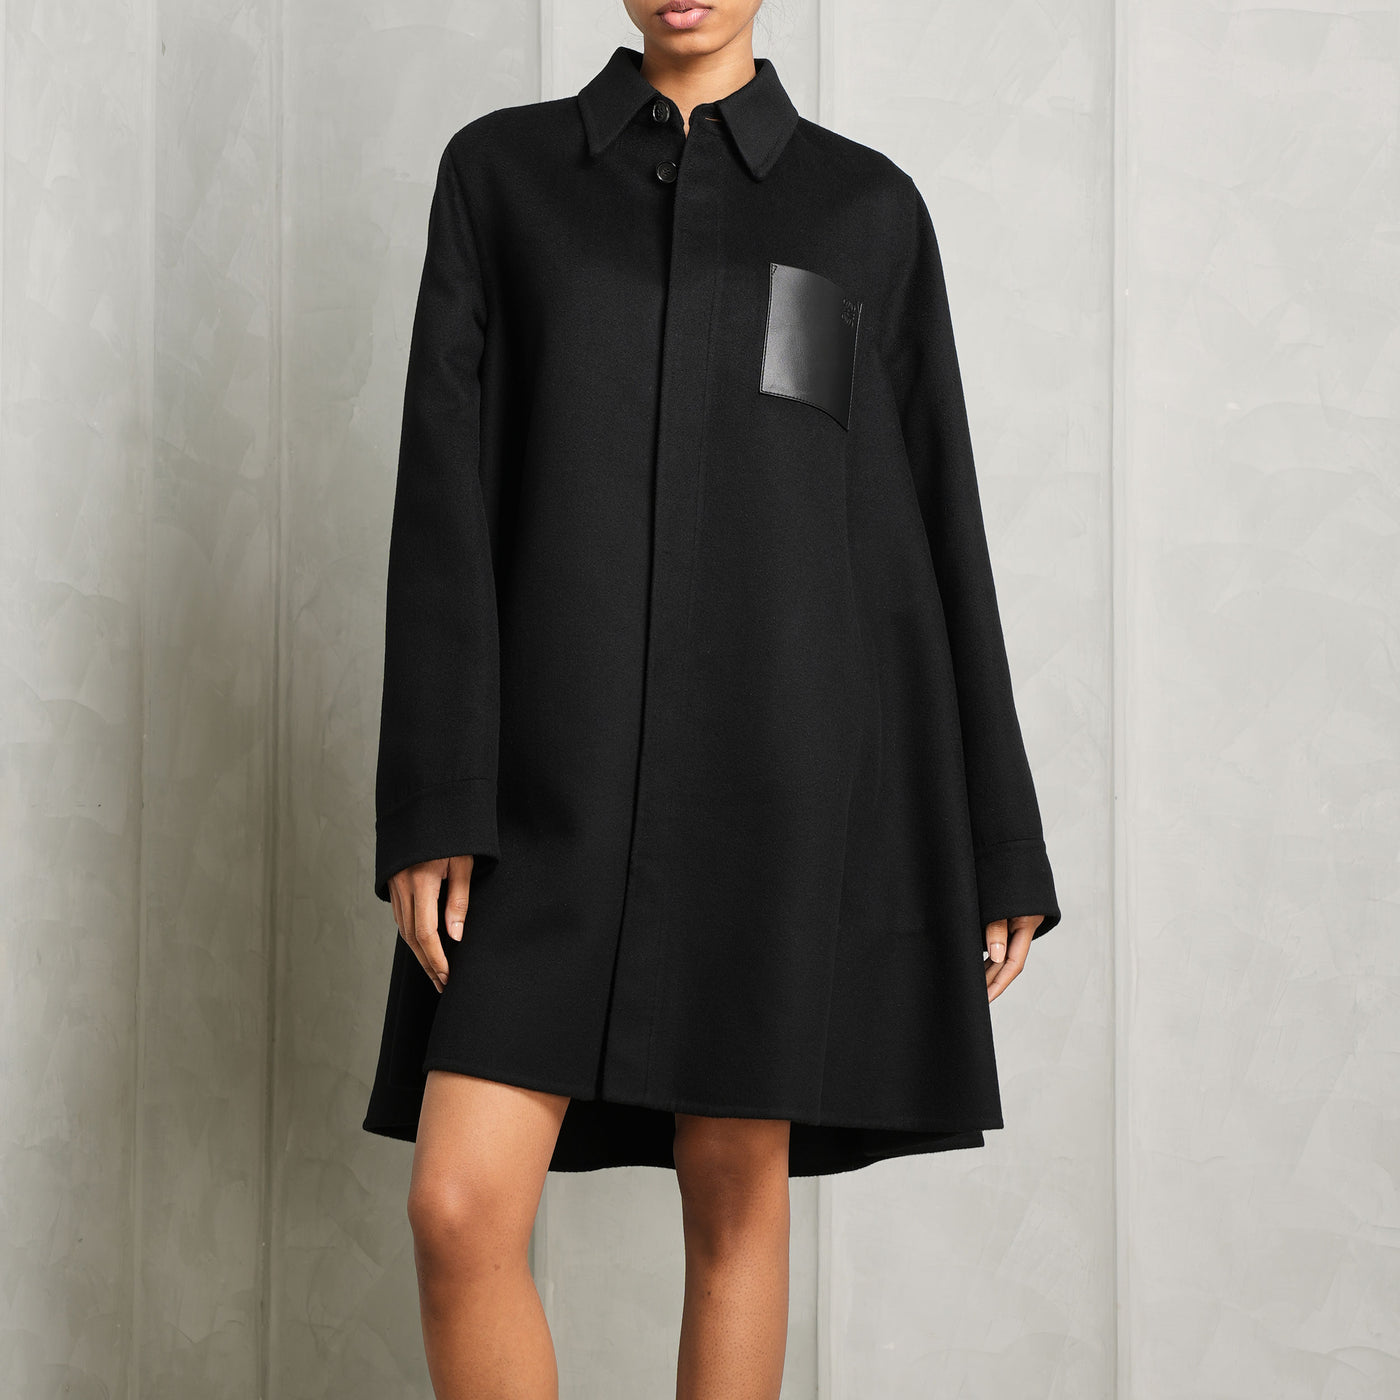 LOEWE black cashmere coat